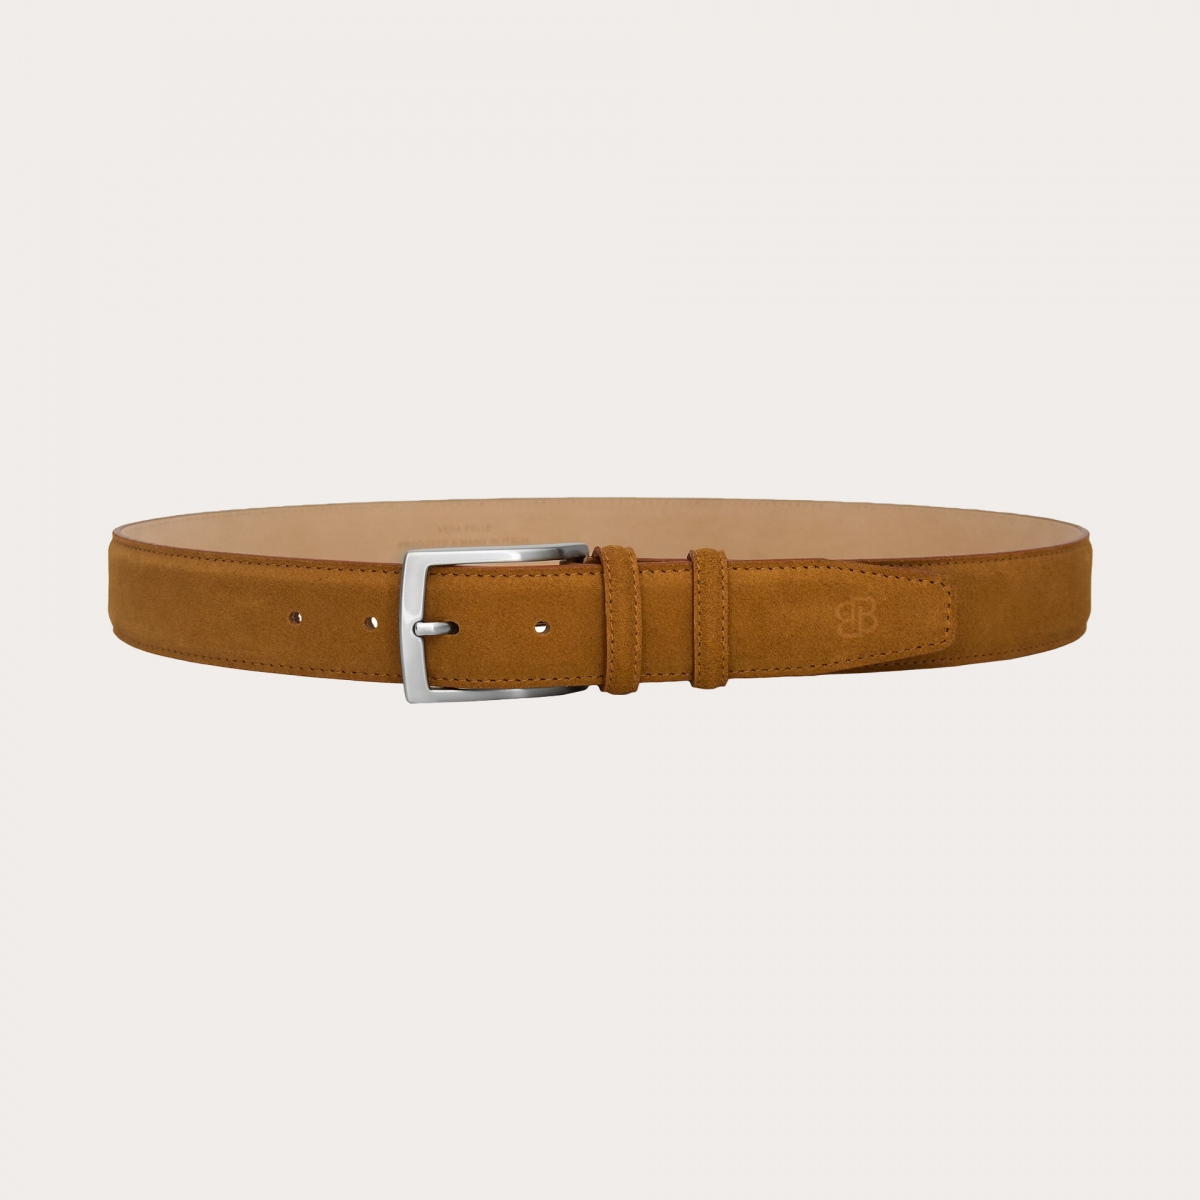 Caramel color suede belt with nickel-free buckle